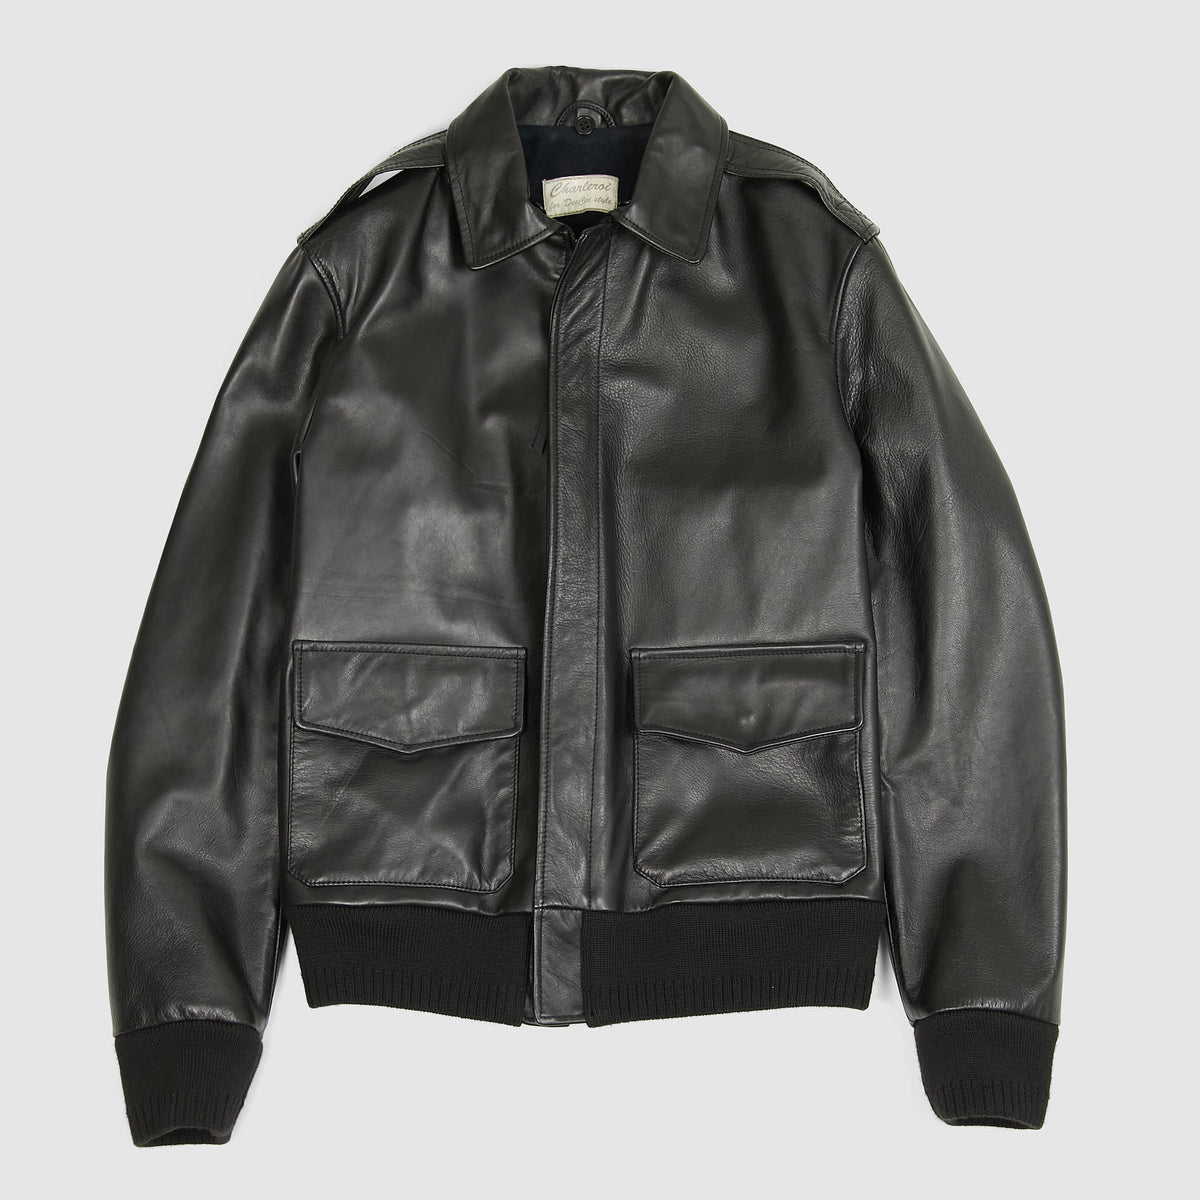 DeeCee style A2 Horshide Leather Jacket